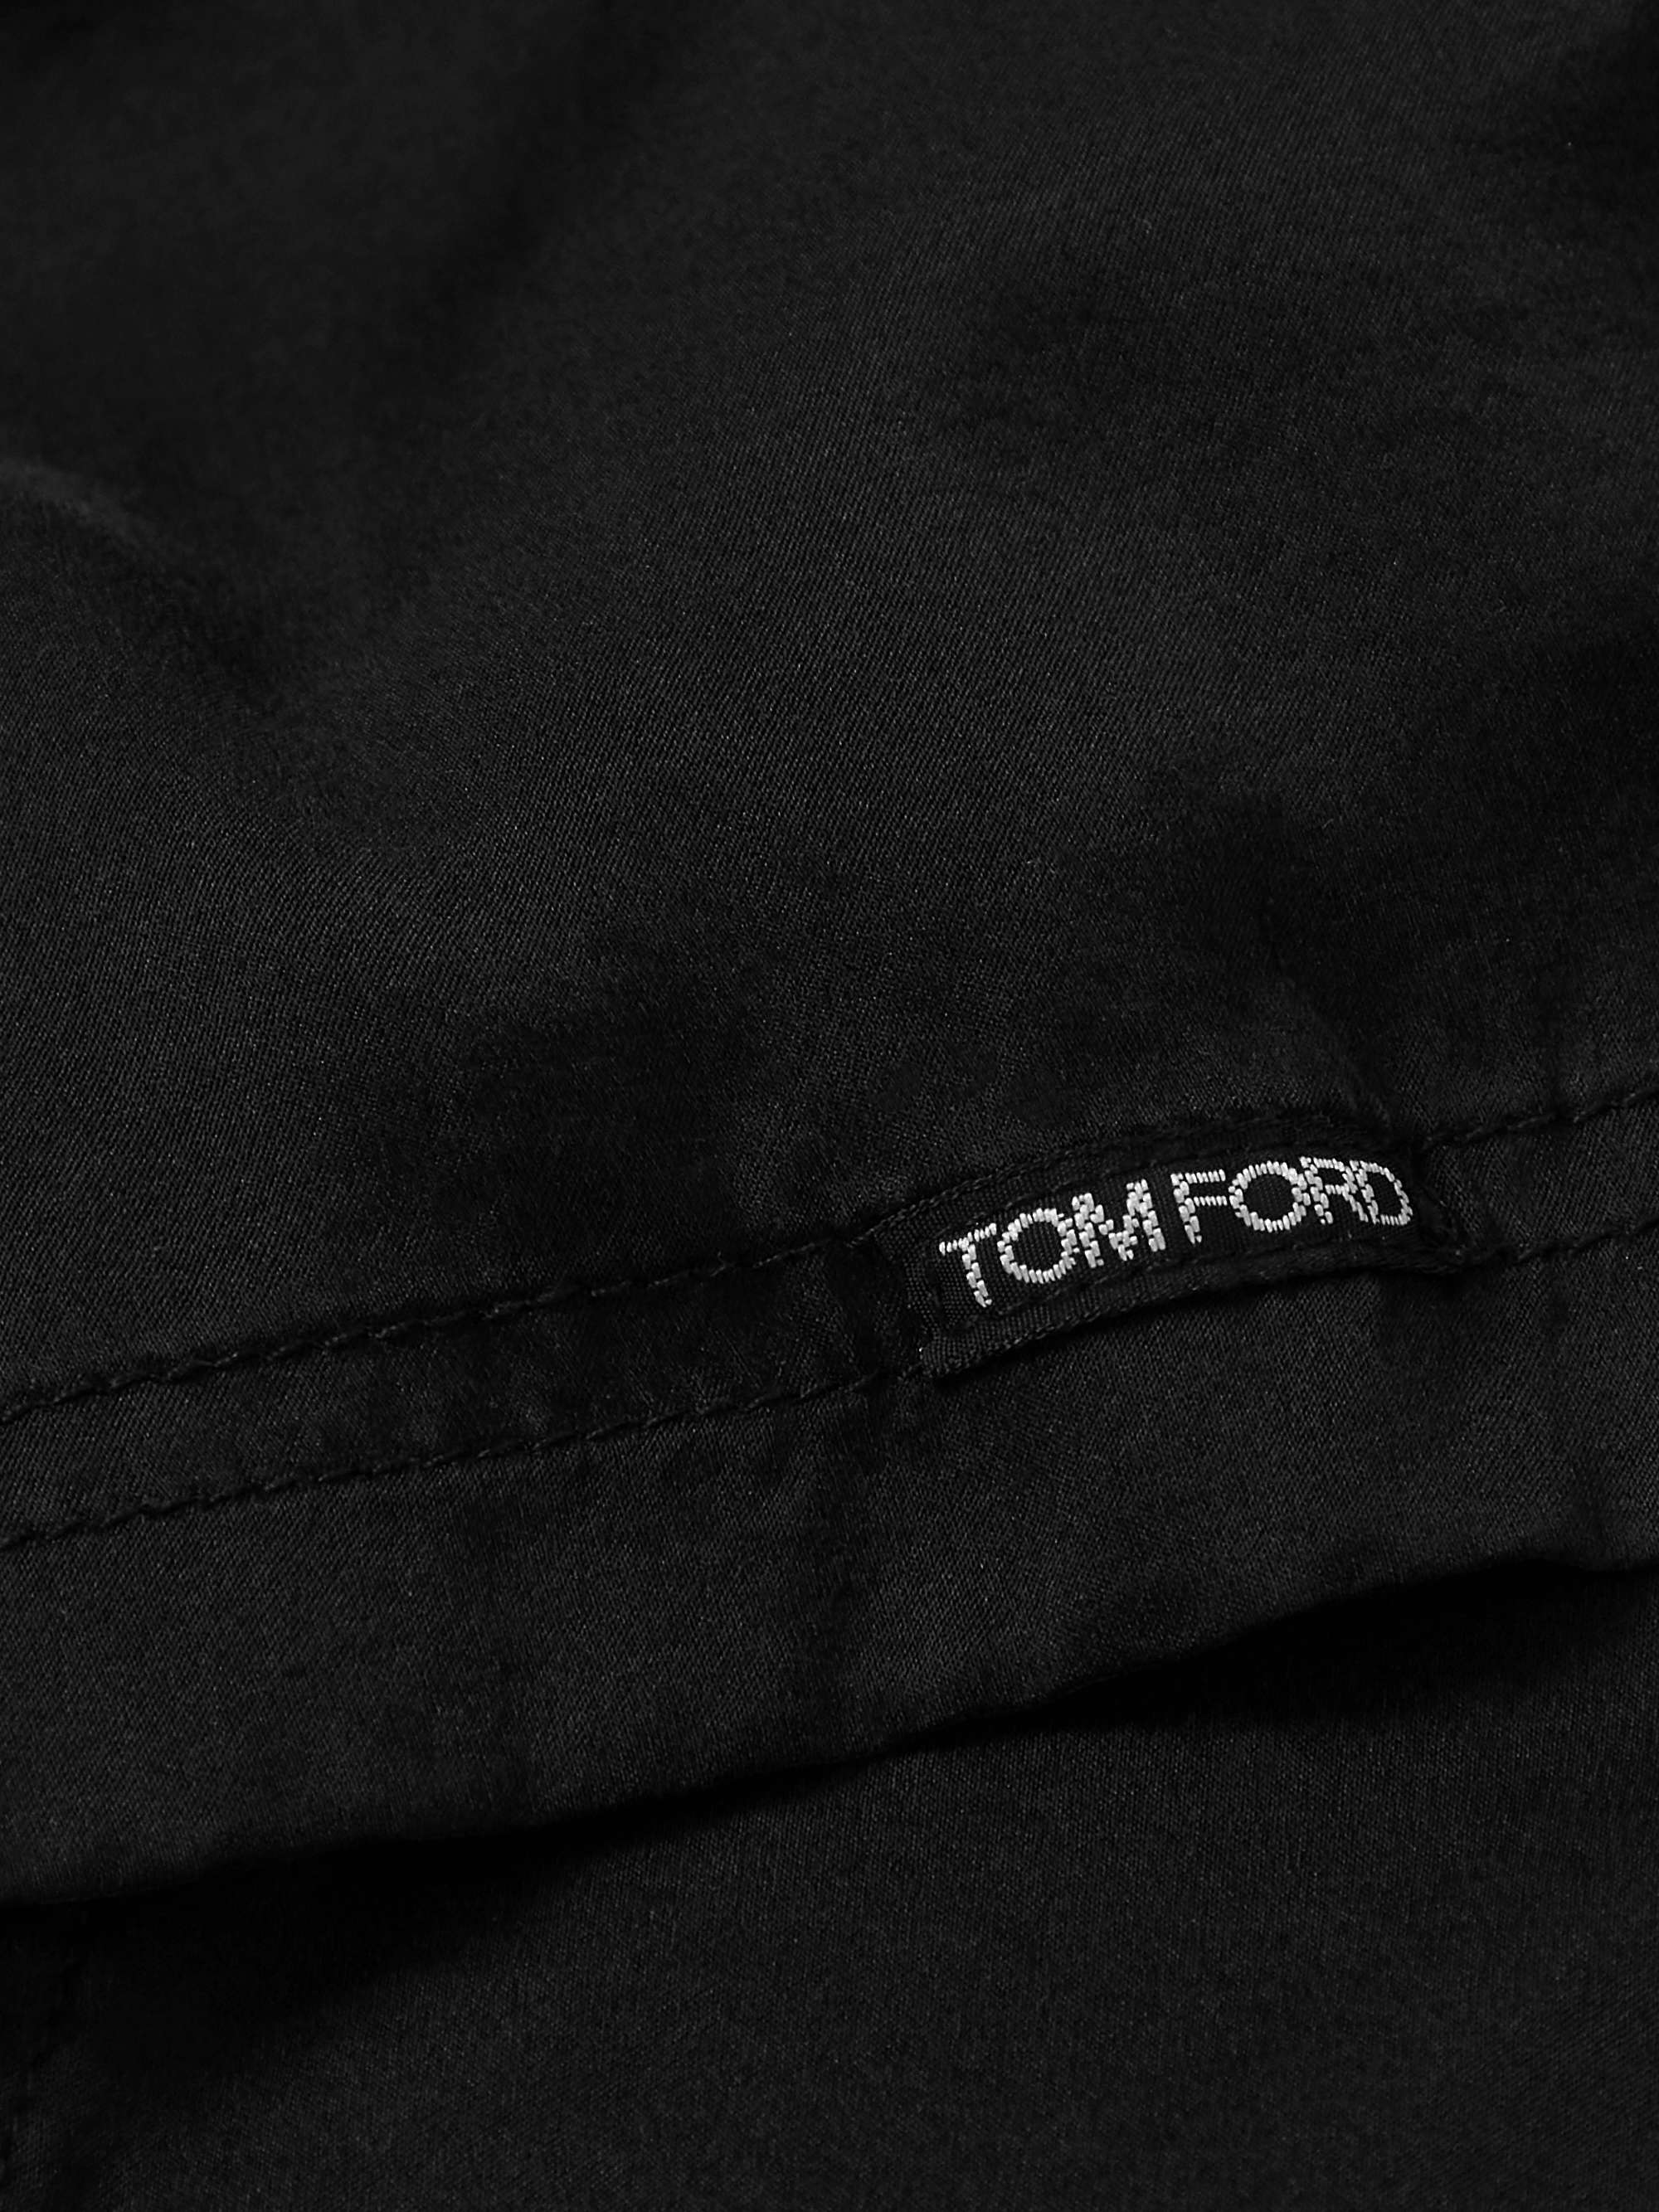 TOM FORD Stretch-Silk Satin Henley Pyjama Top